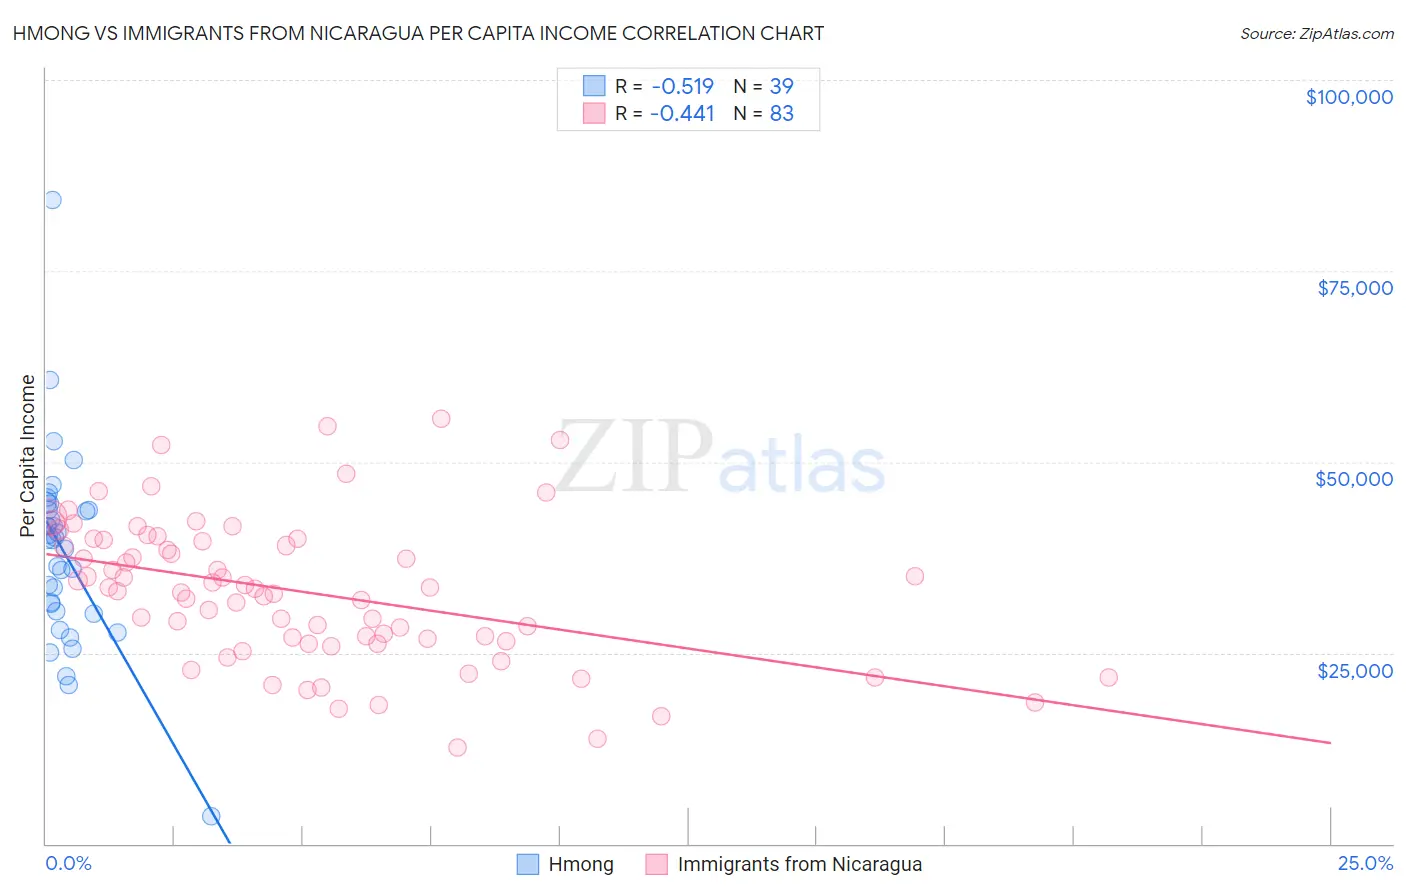 Hmong vs Immigrants from Nicaragua Per Capita Income